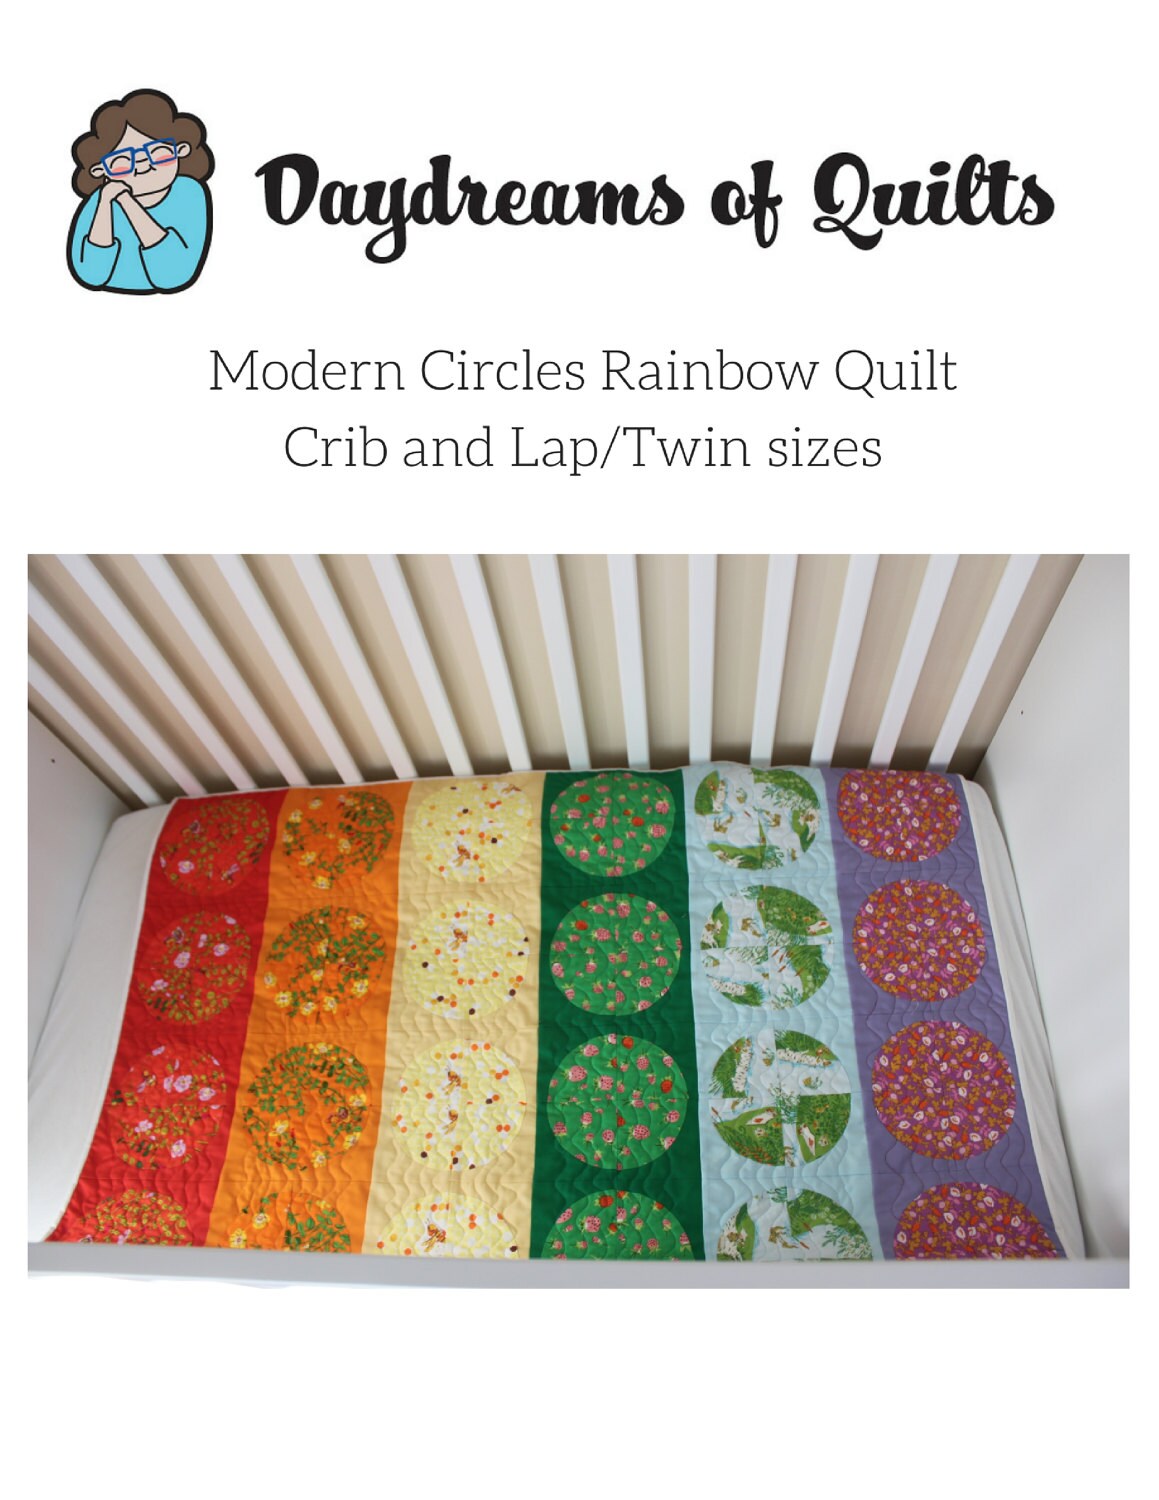 Modern Circles Rainbow Quilt Crib and Lap/Twin Sizes PDF Quilt Pattern using Drunkard's Path Blocks